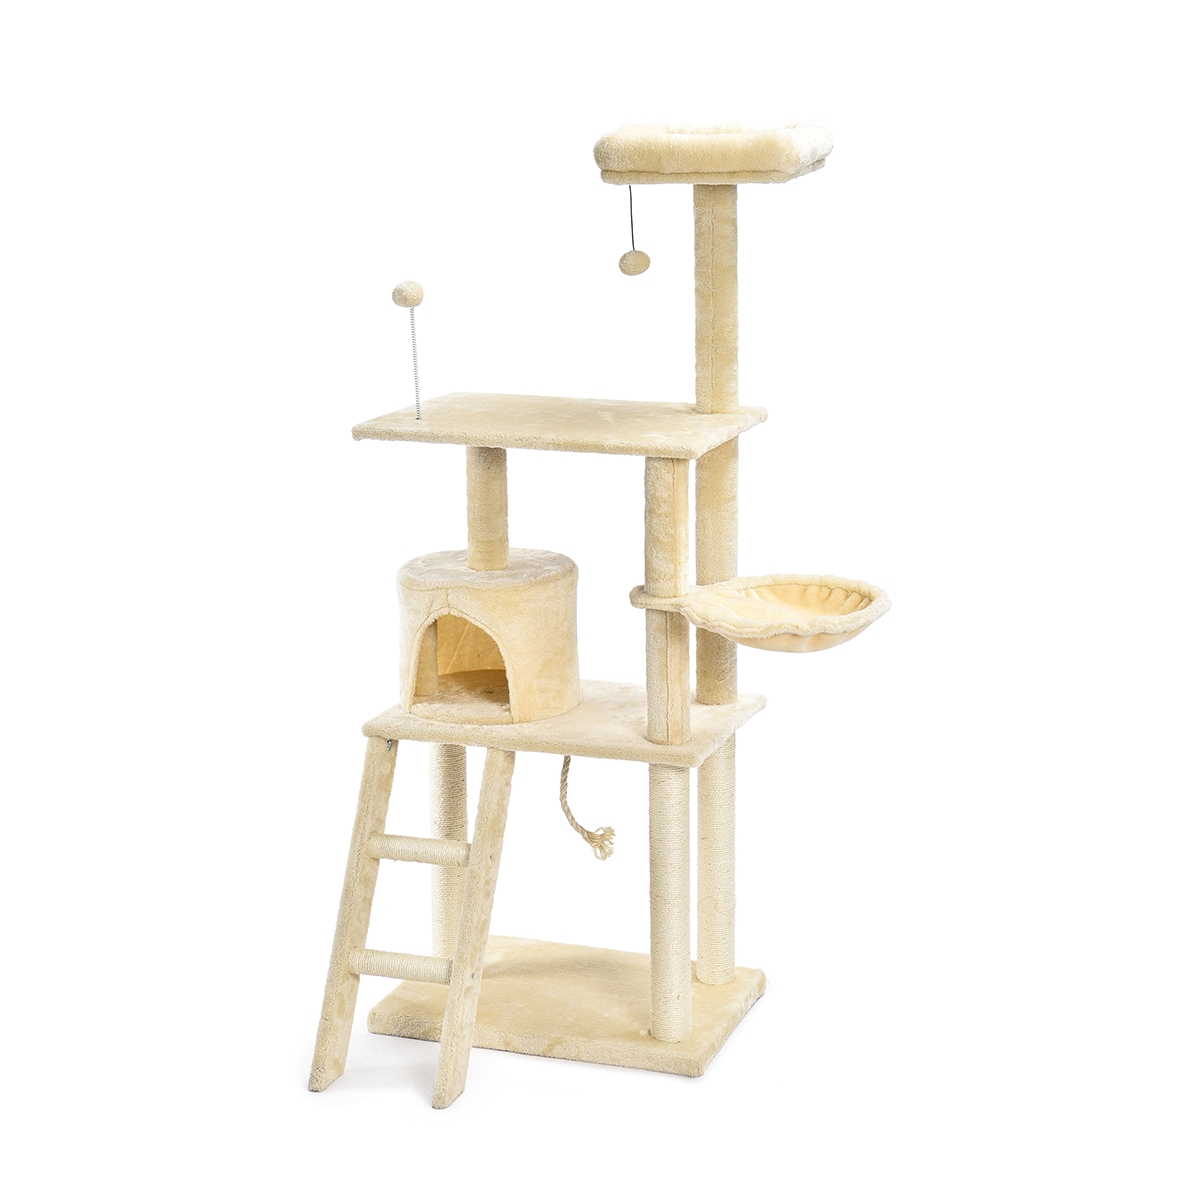 Cat Activity Platforms Sisal Cat Tree House,Scratching Post Cat Tree Tower